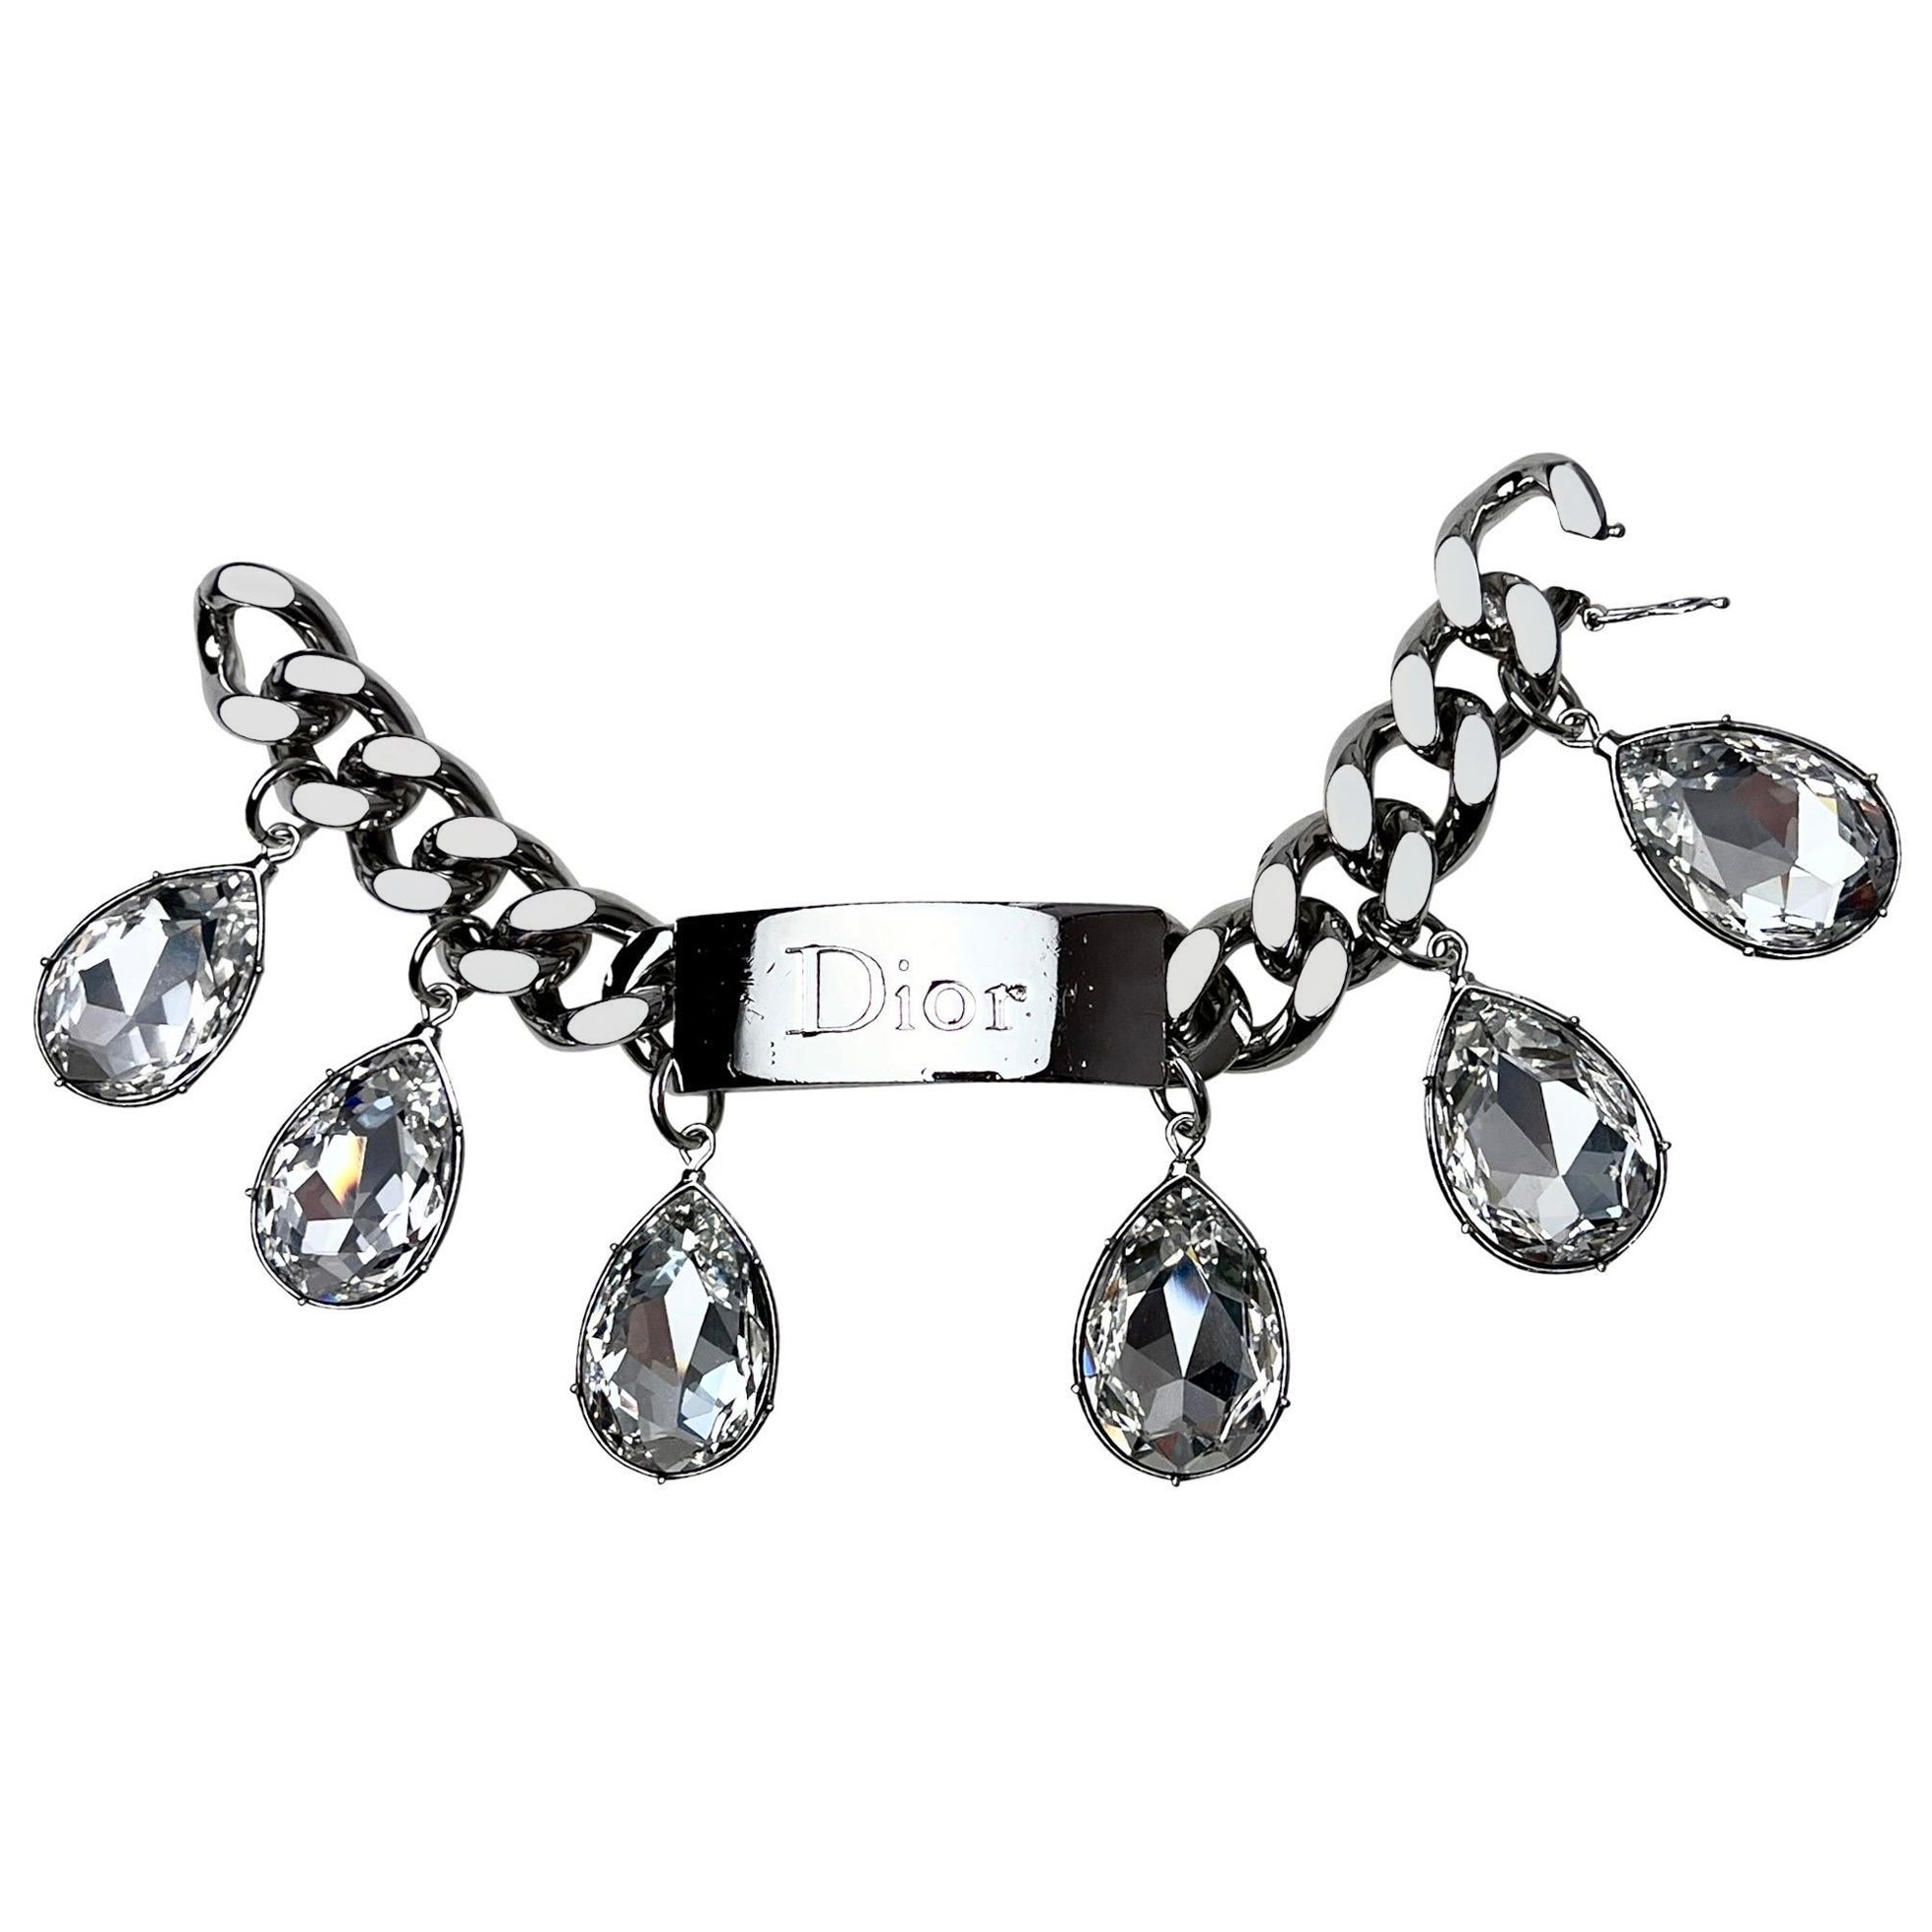 Dior by John Galliano Fall 2004 Swarovski Crystal Runway Bracelet For Sale